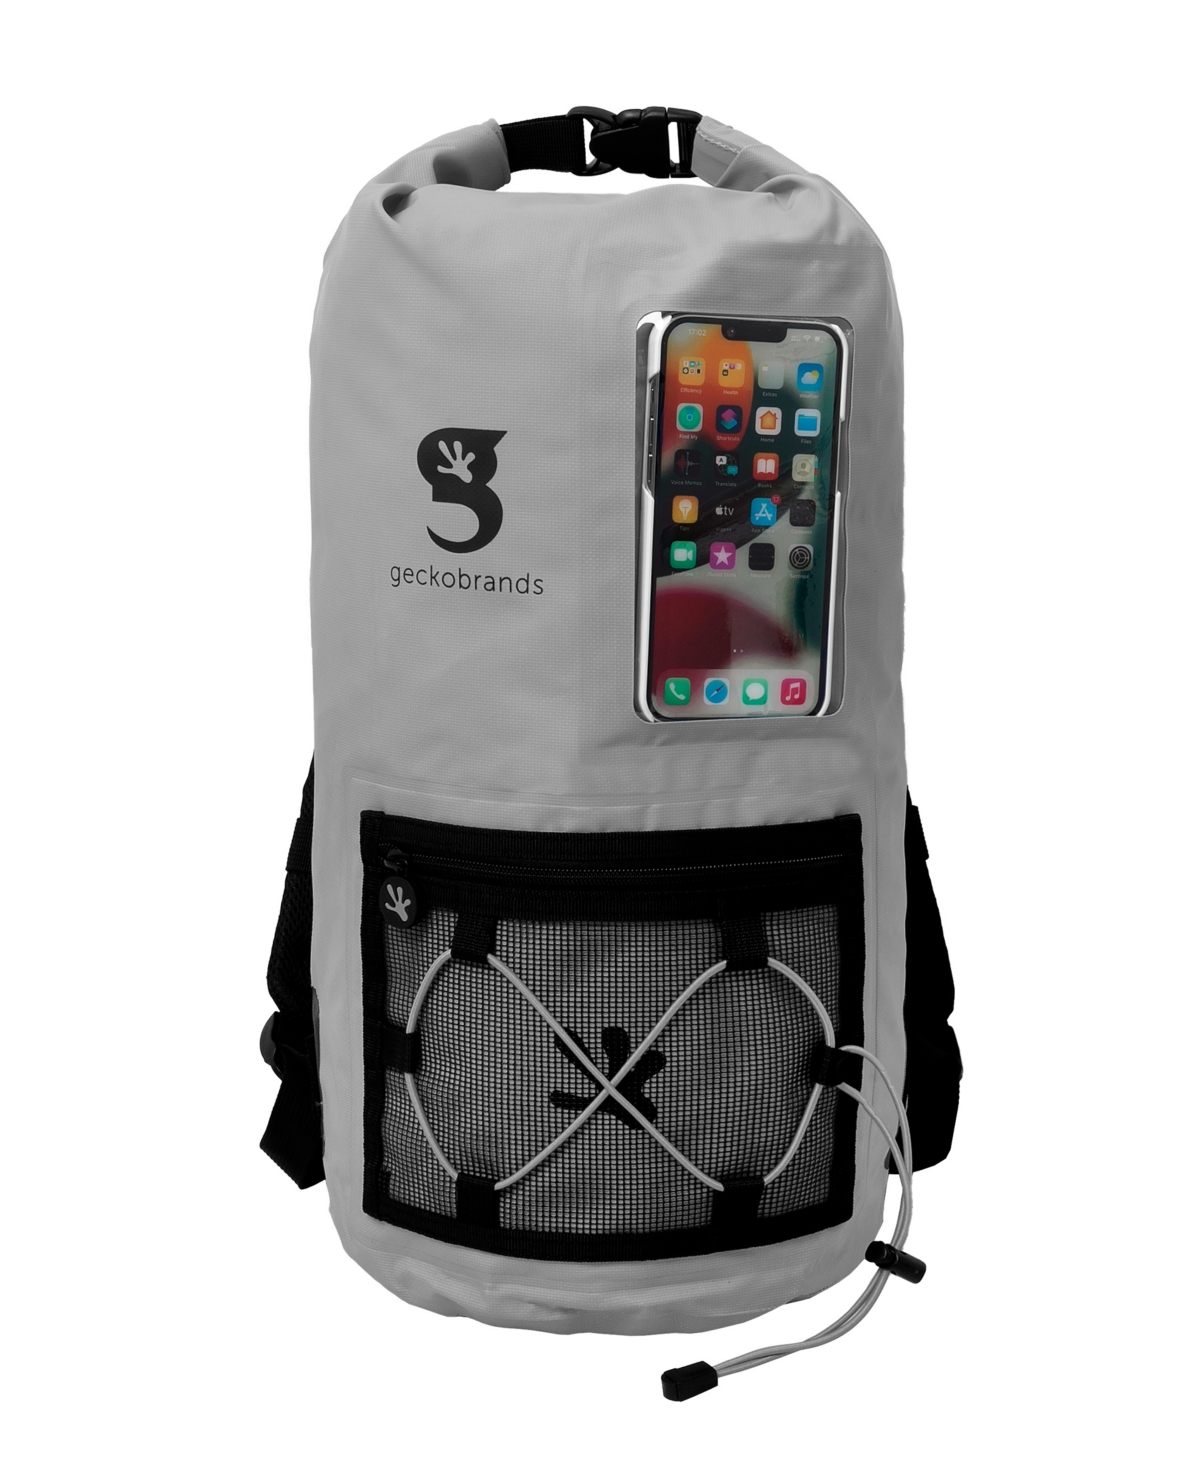 Geckobrands Hydroner 20 Liters Water-resistant Backpack In Gray